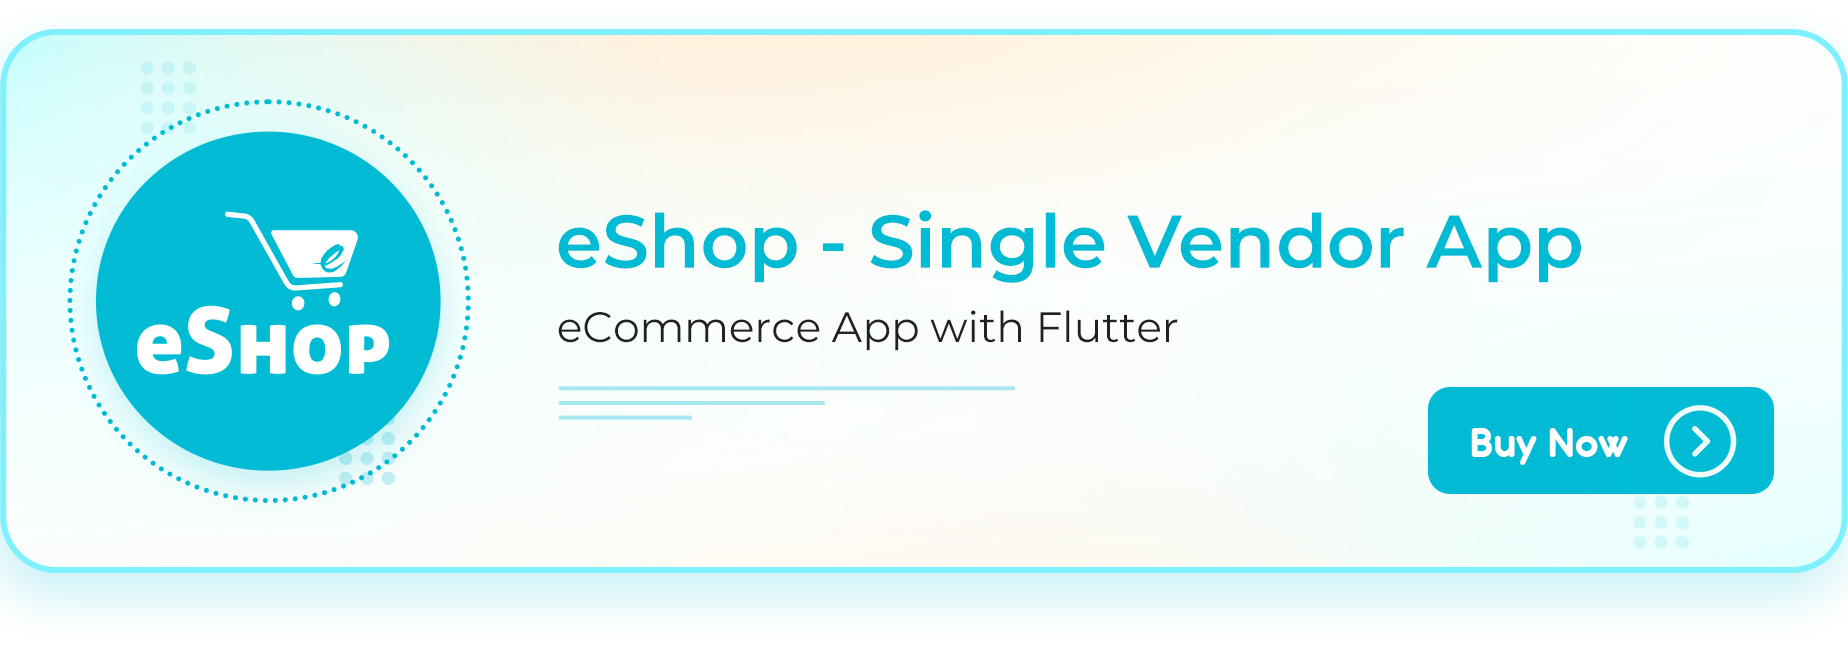 eShop Web- eCommerce Single Vendor Website | eCommerce Store Website - 8